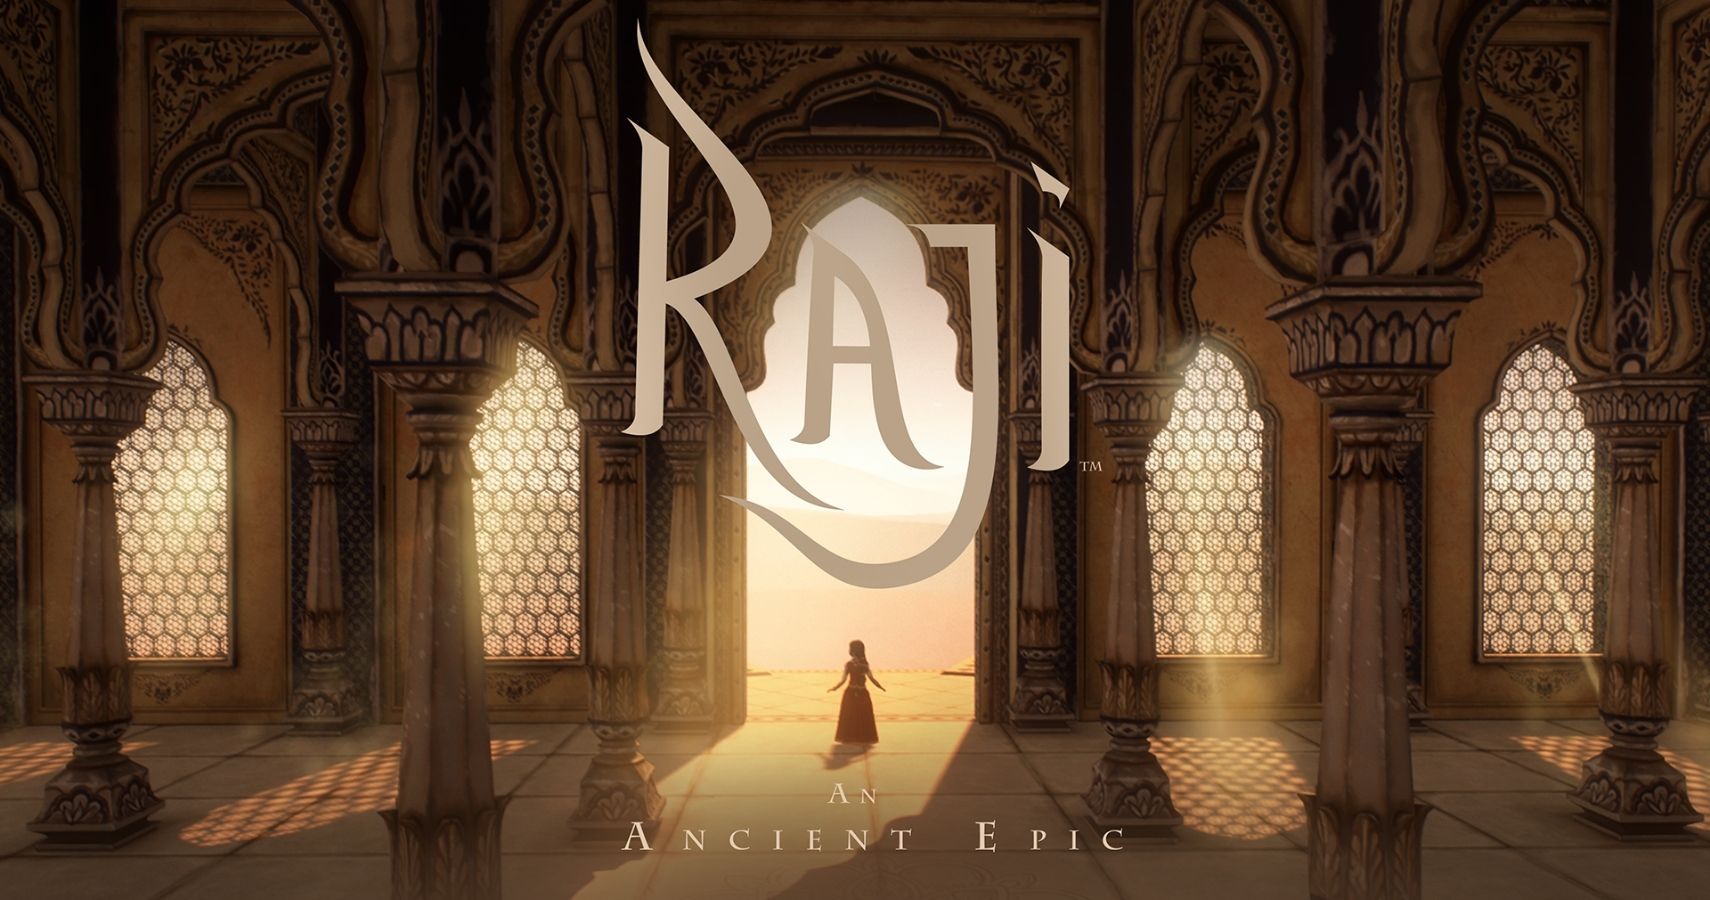 Raji An Ancient Epic Launch Date Announcement feature image